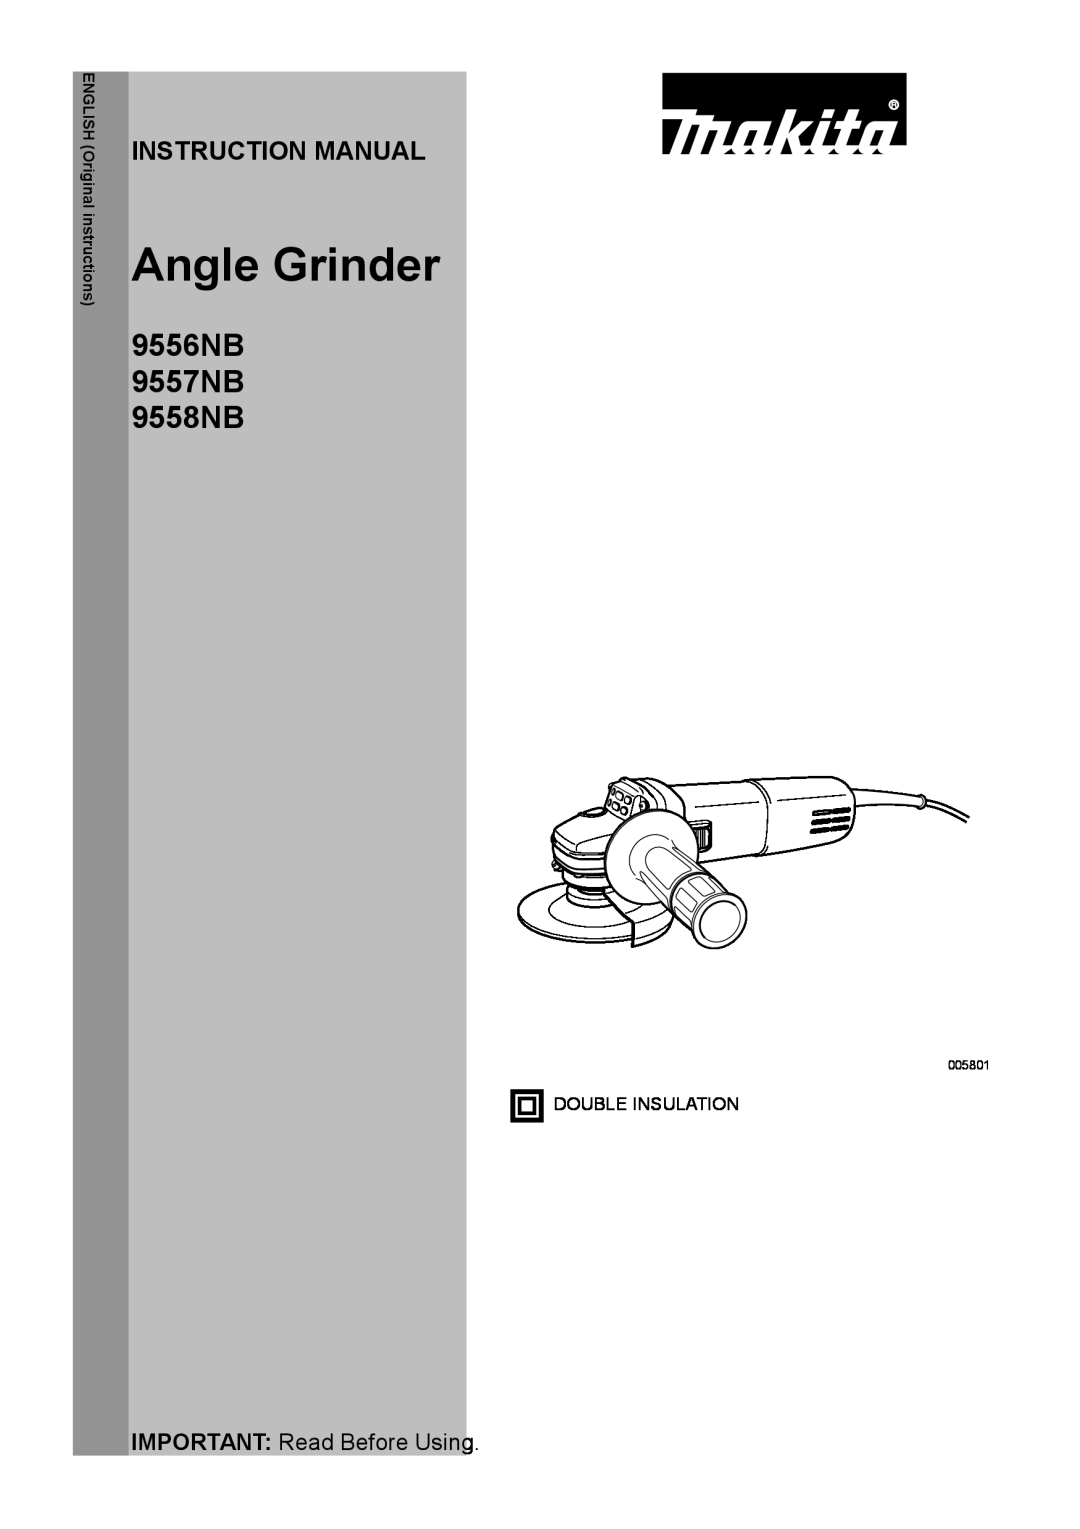 Makita instruction manual Instruction Manual, Angle Grinder, 9556NB 9557NB 9558NB, IMPORTANT Read Before Using, 005801 